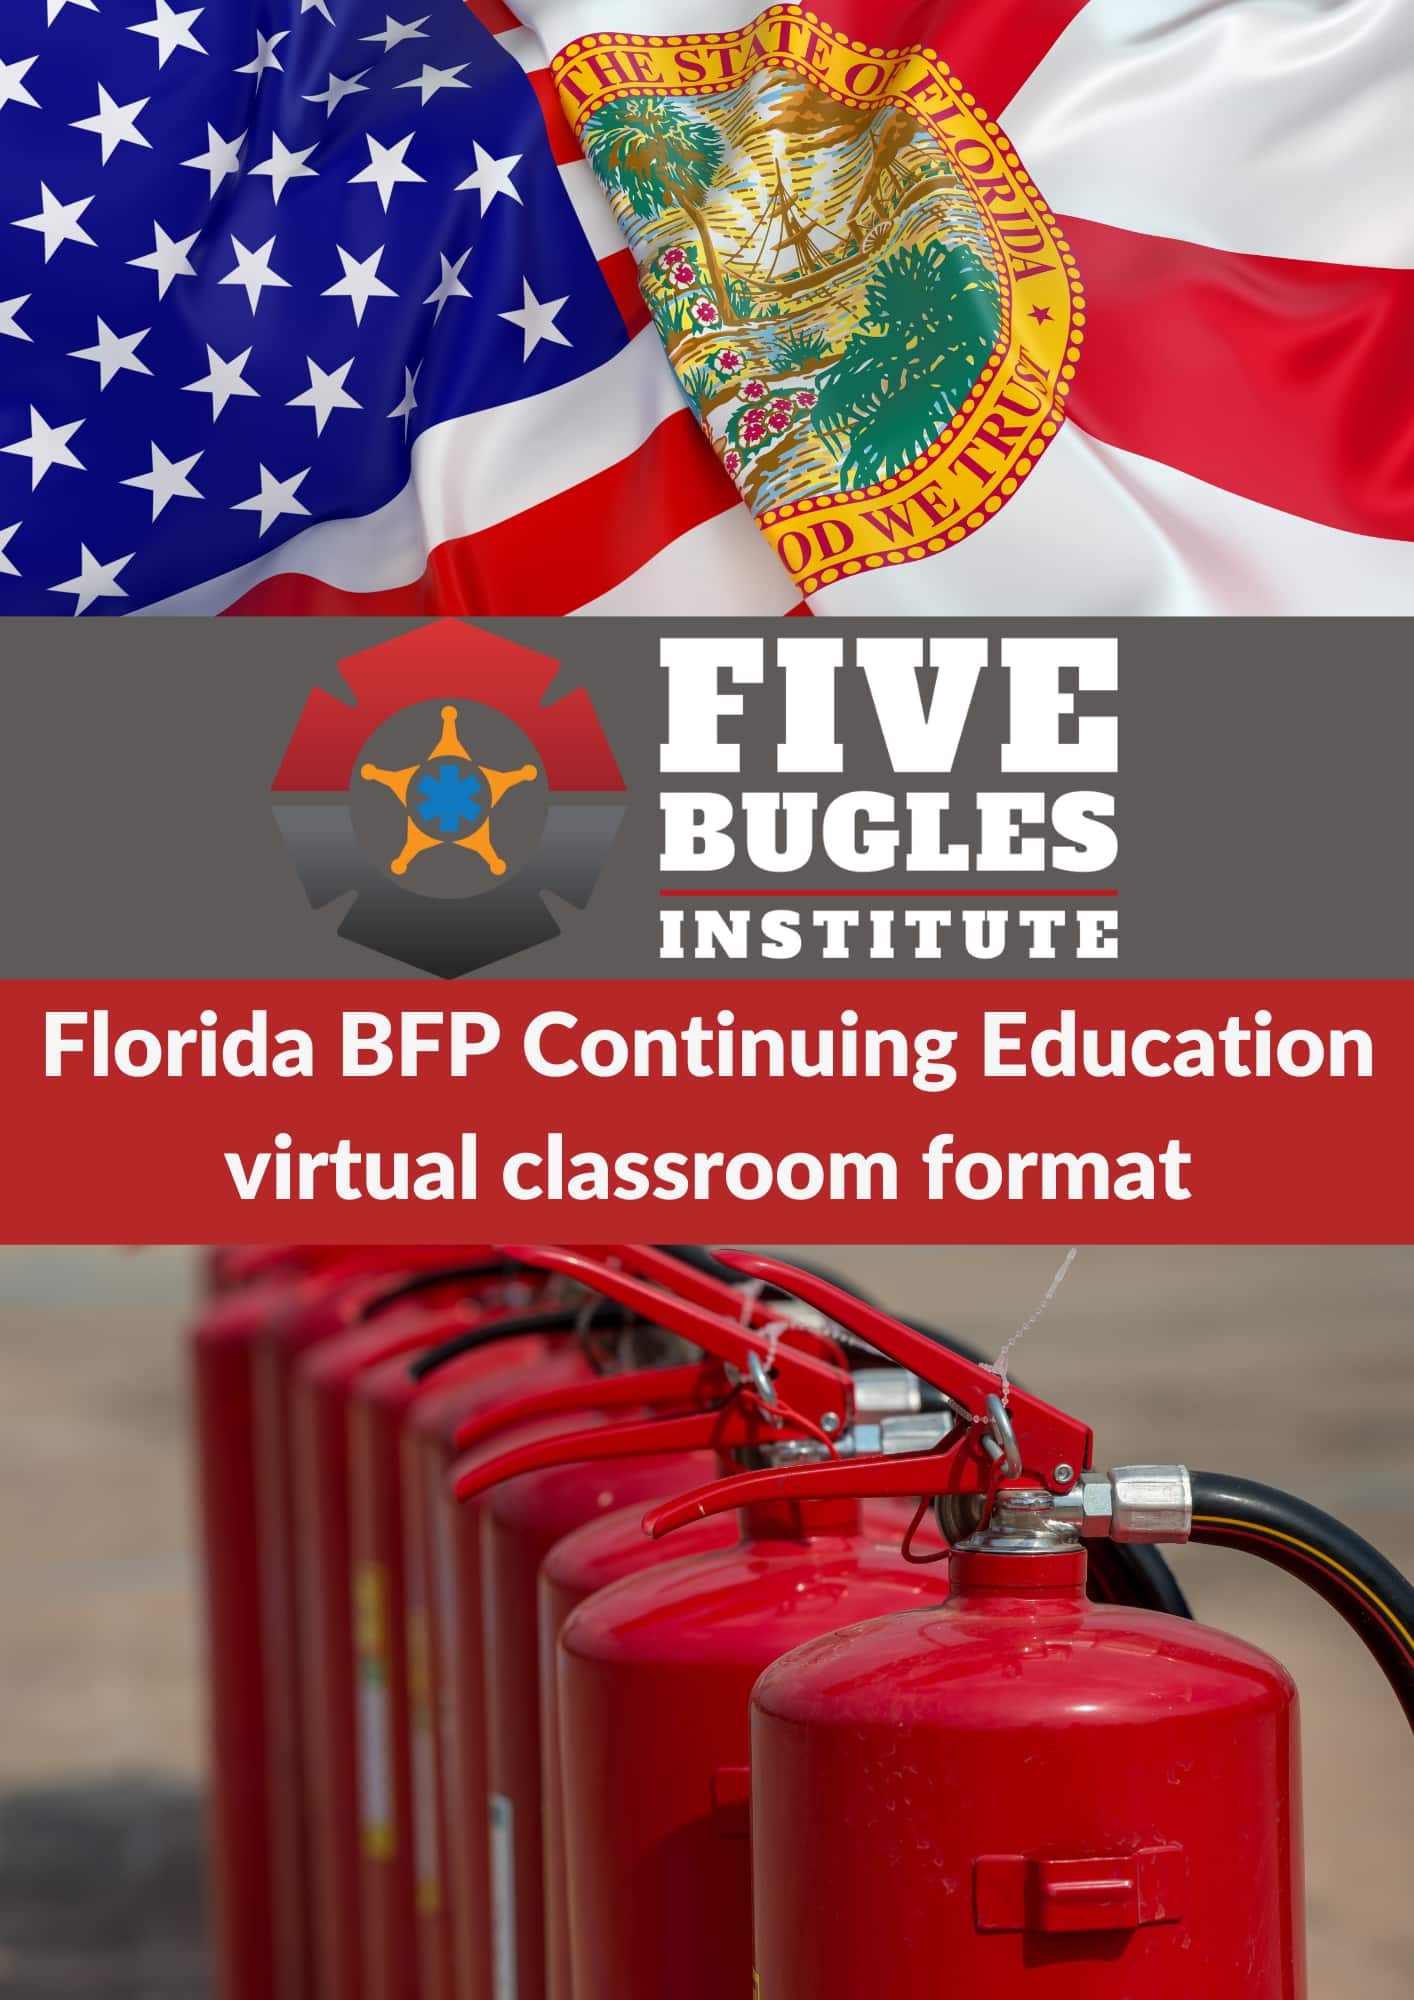 Florida BFP Continuing Education virtual classroom format